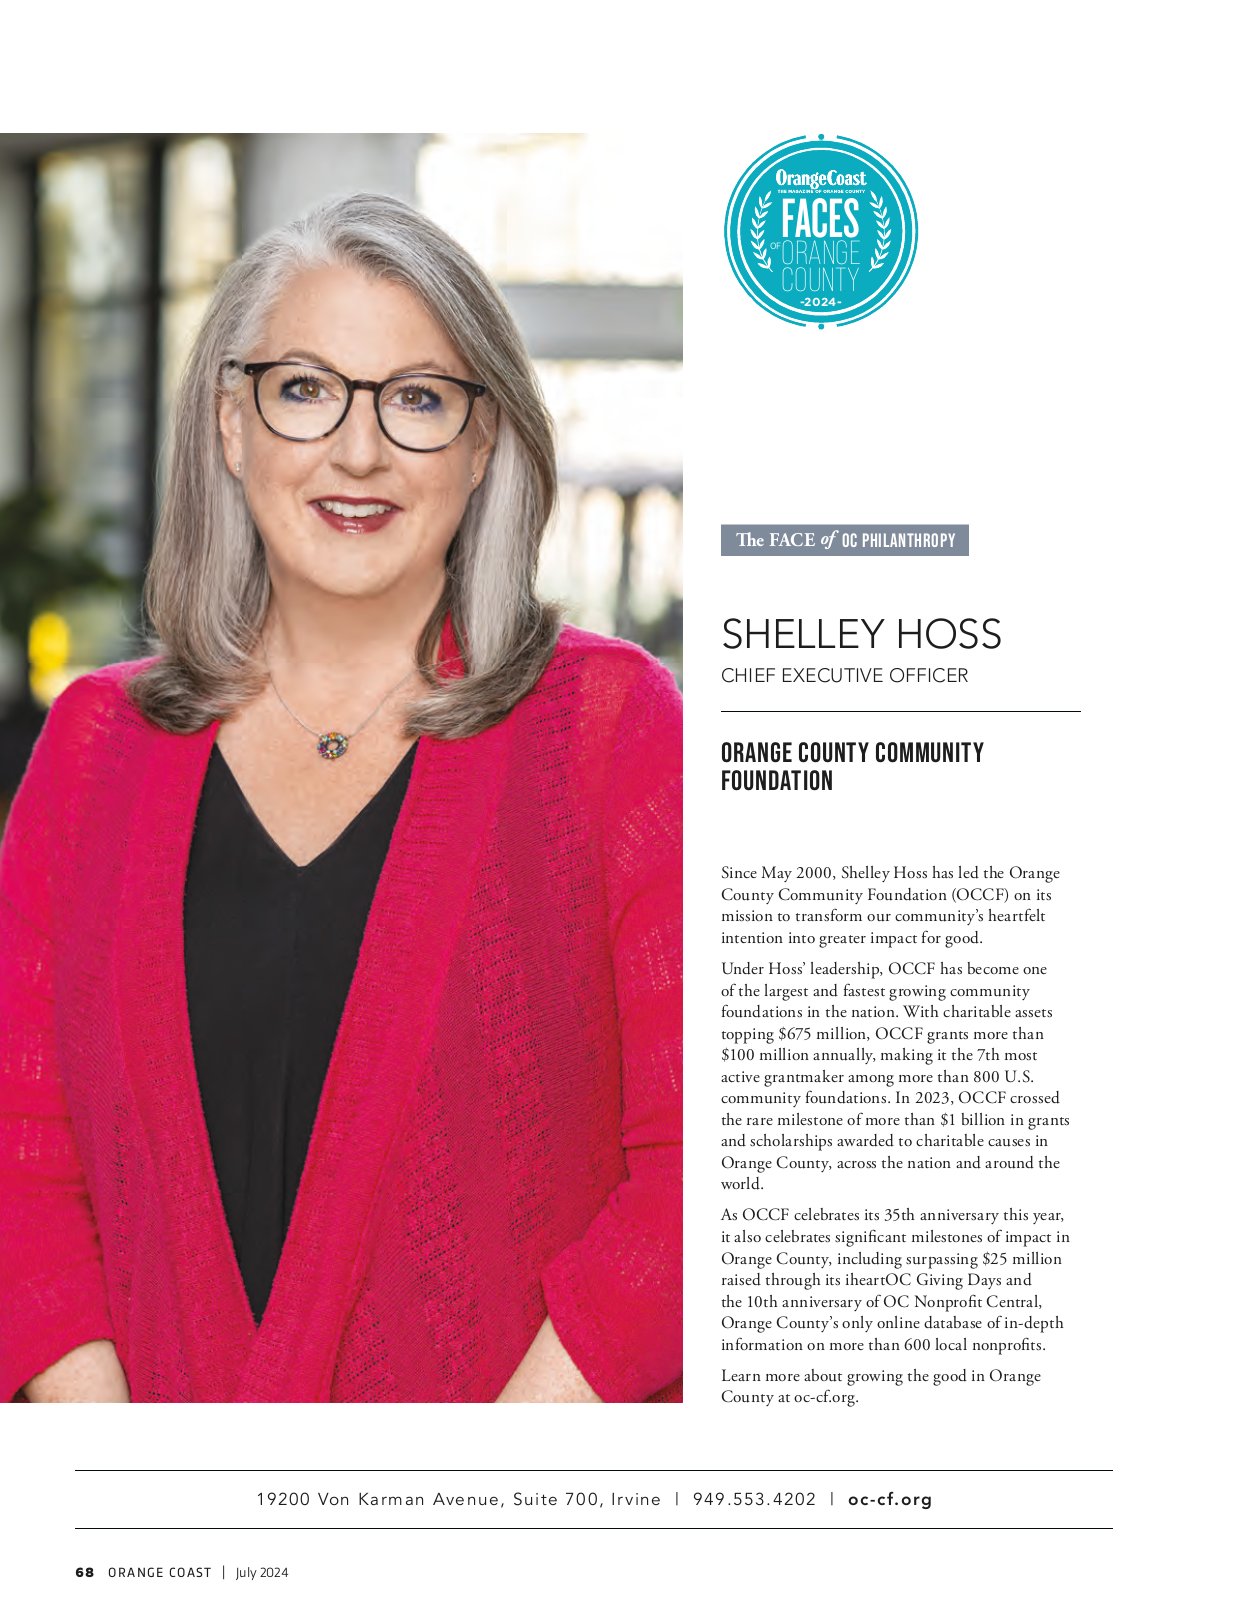 The Face of OC Philanthropy: Shelley Hoss